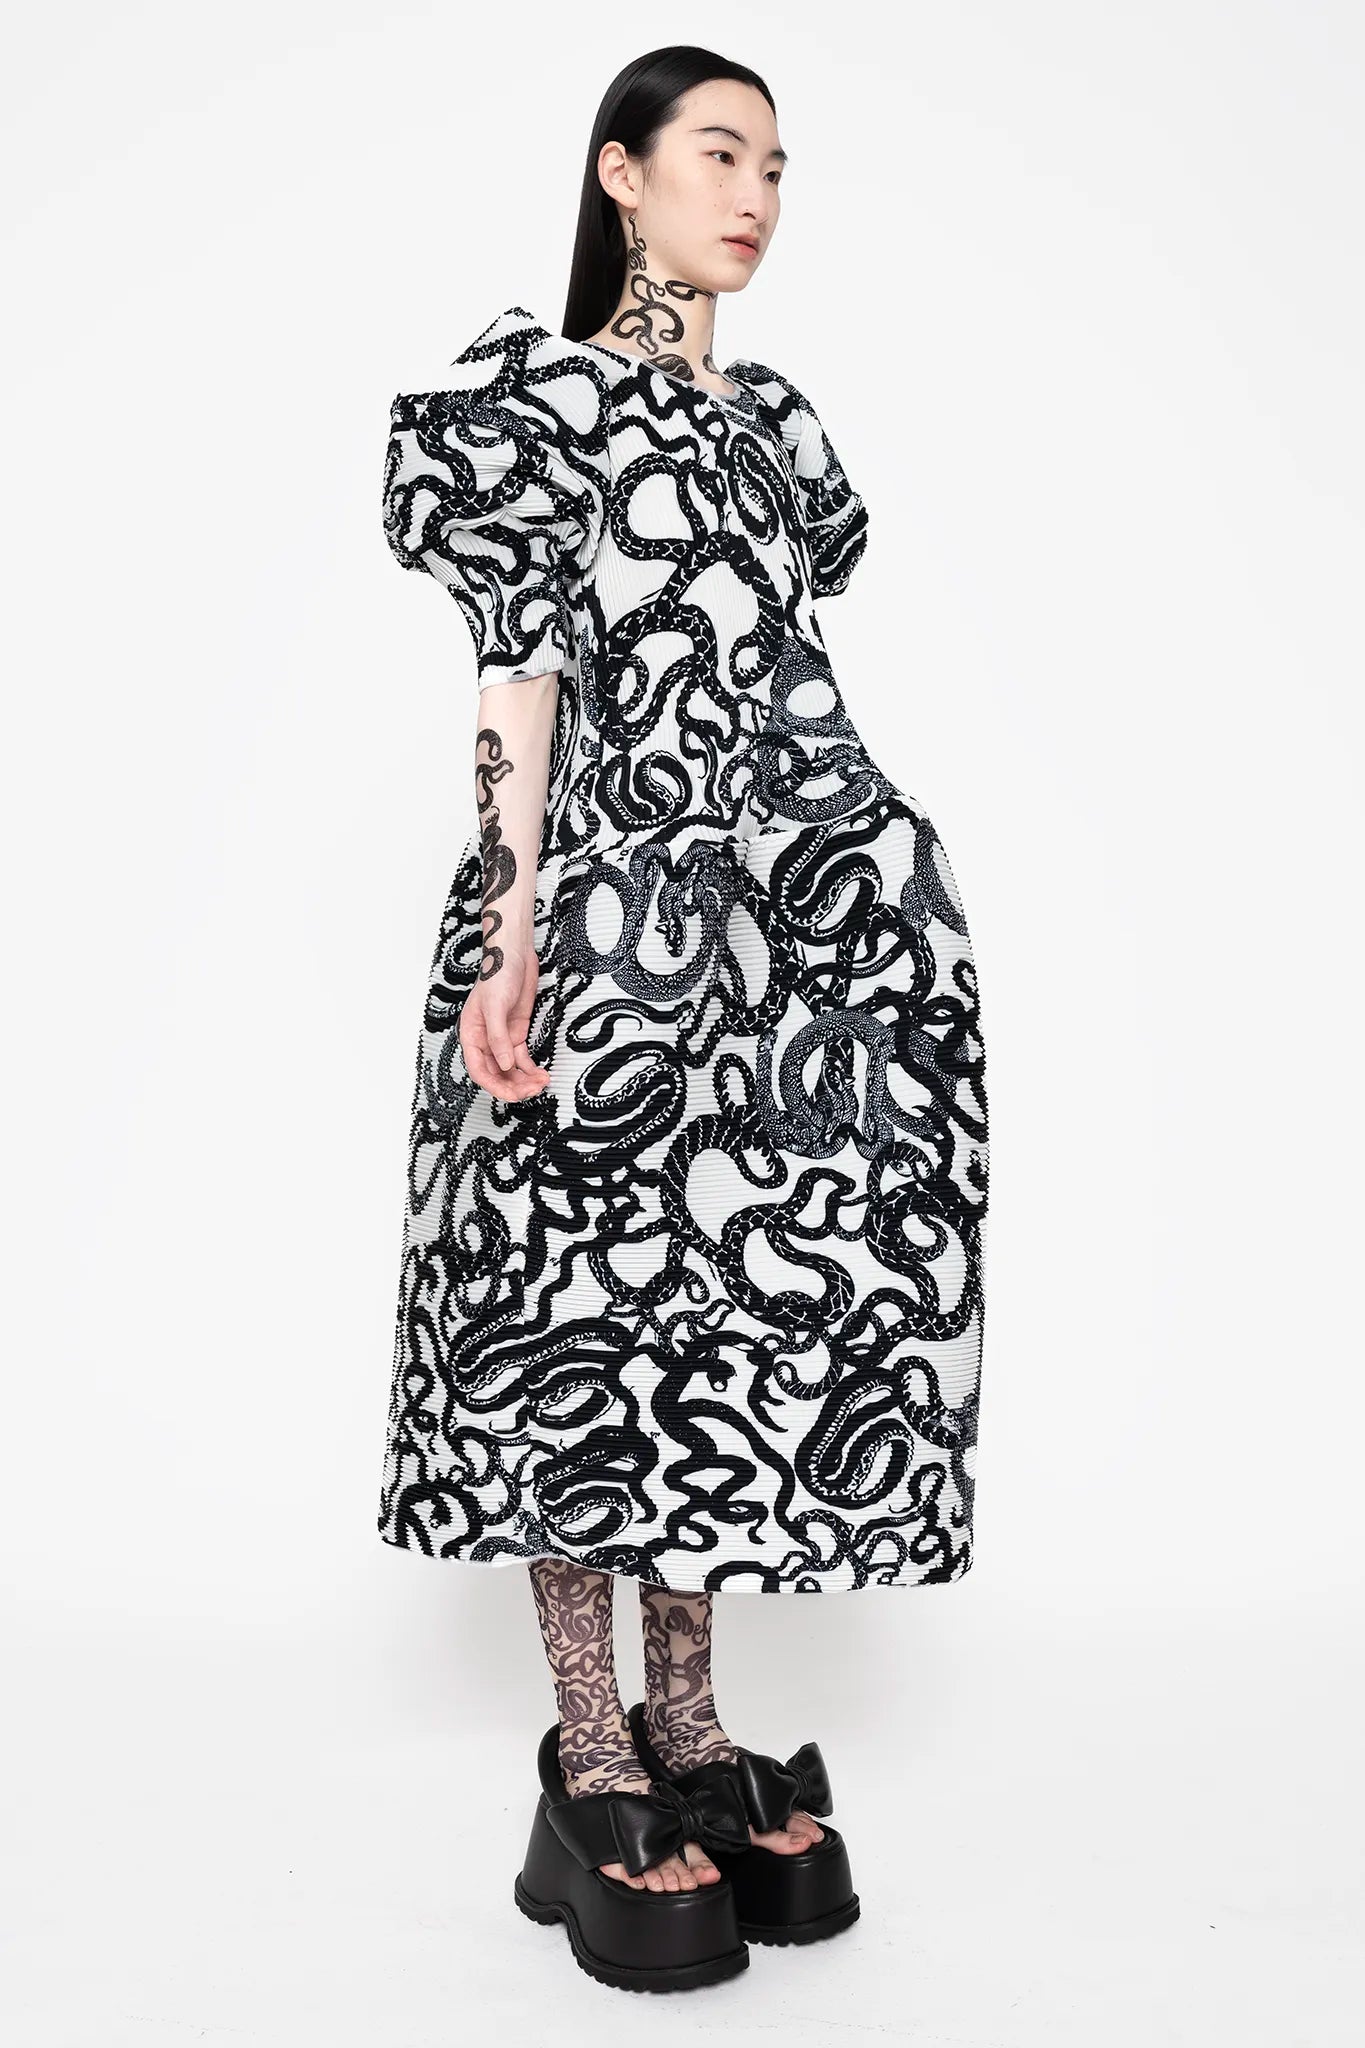 MELITTA BAUMEISTER - Big Sleeve Ripple Dress in Snake Print